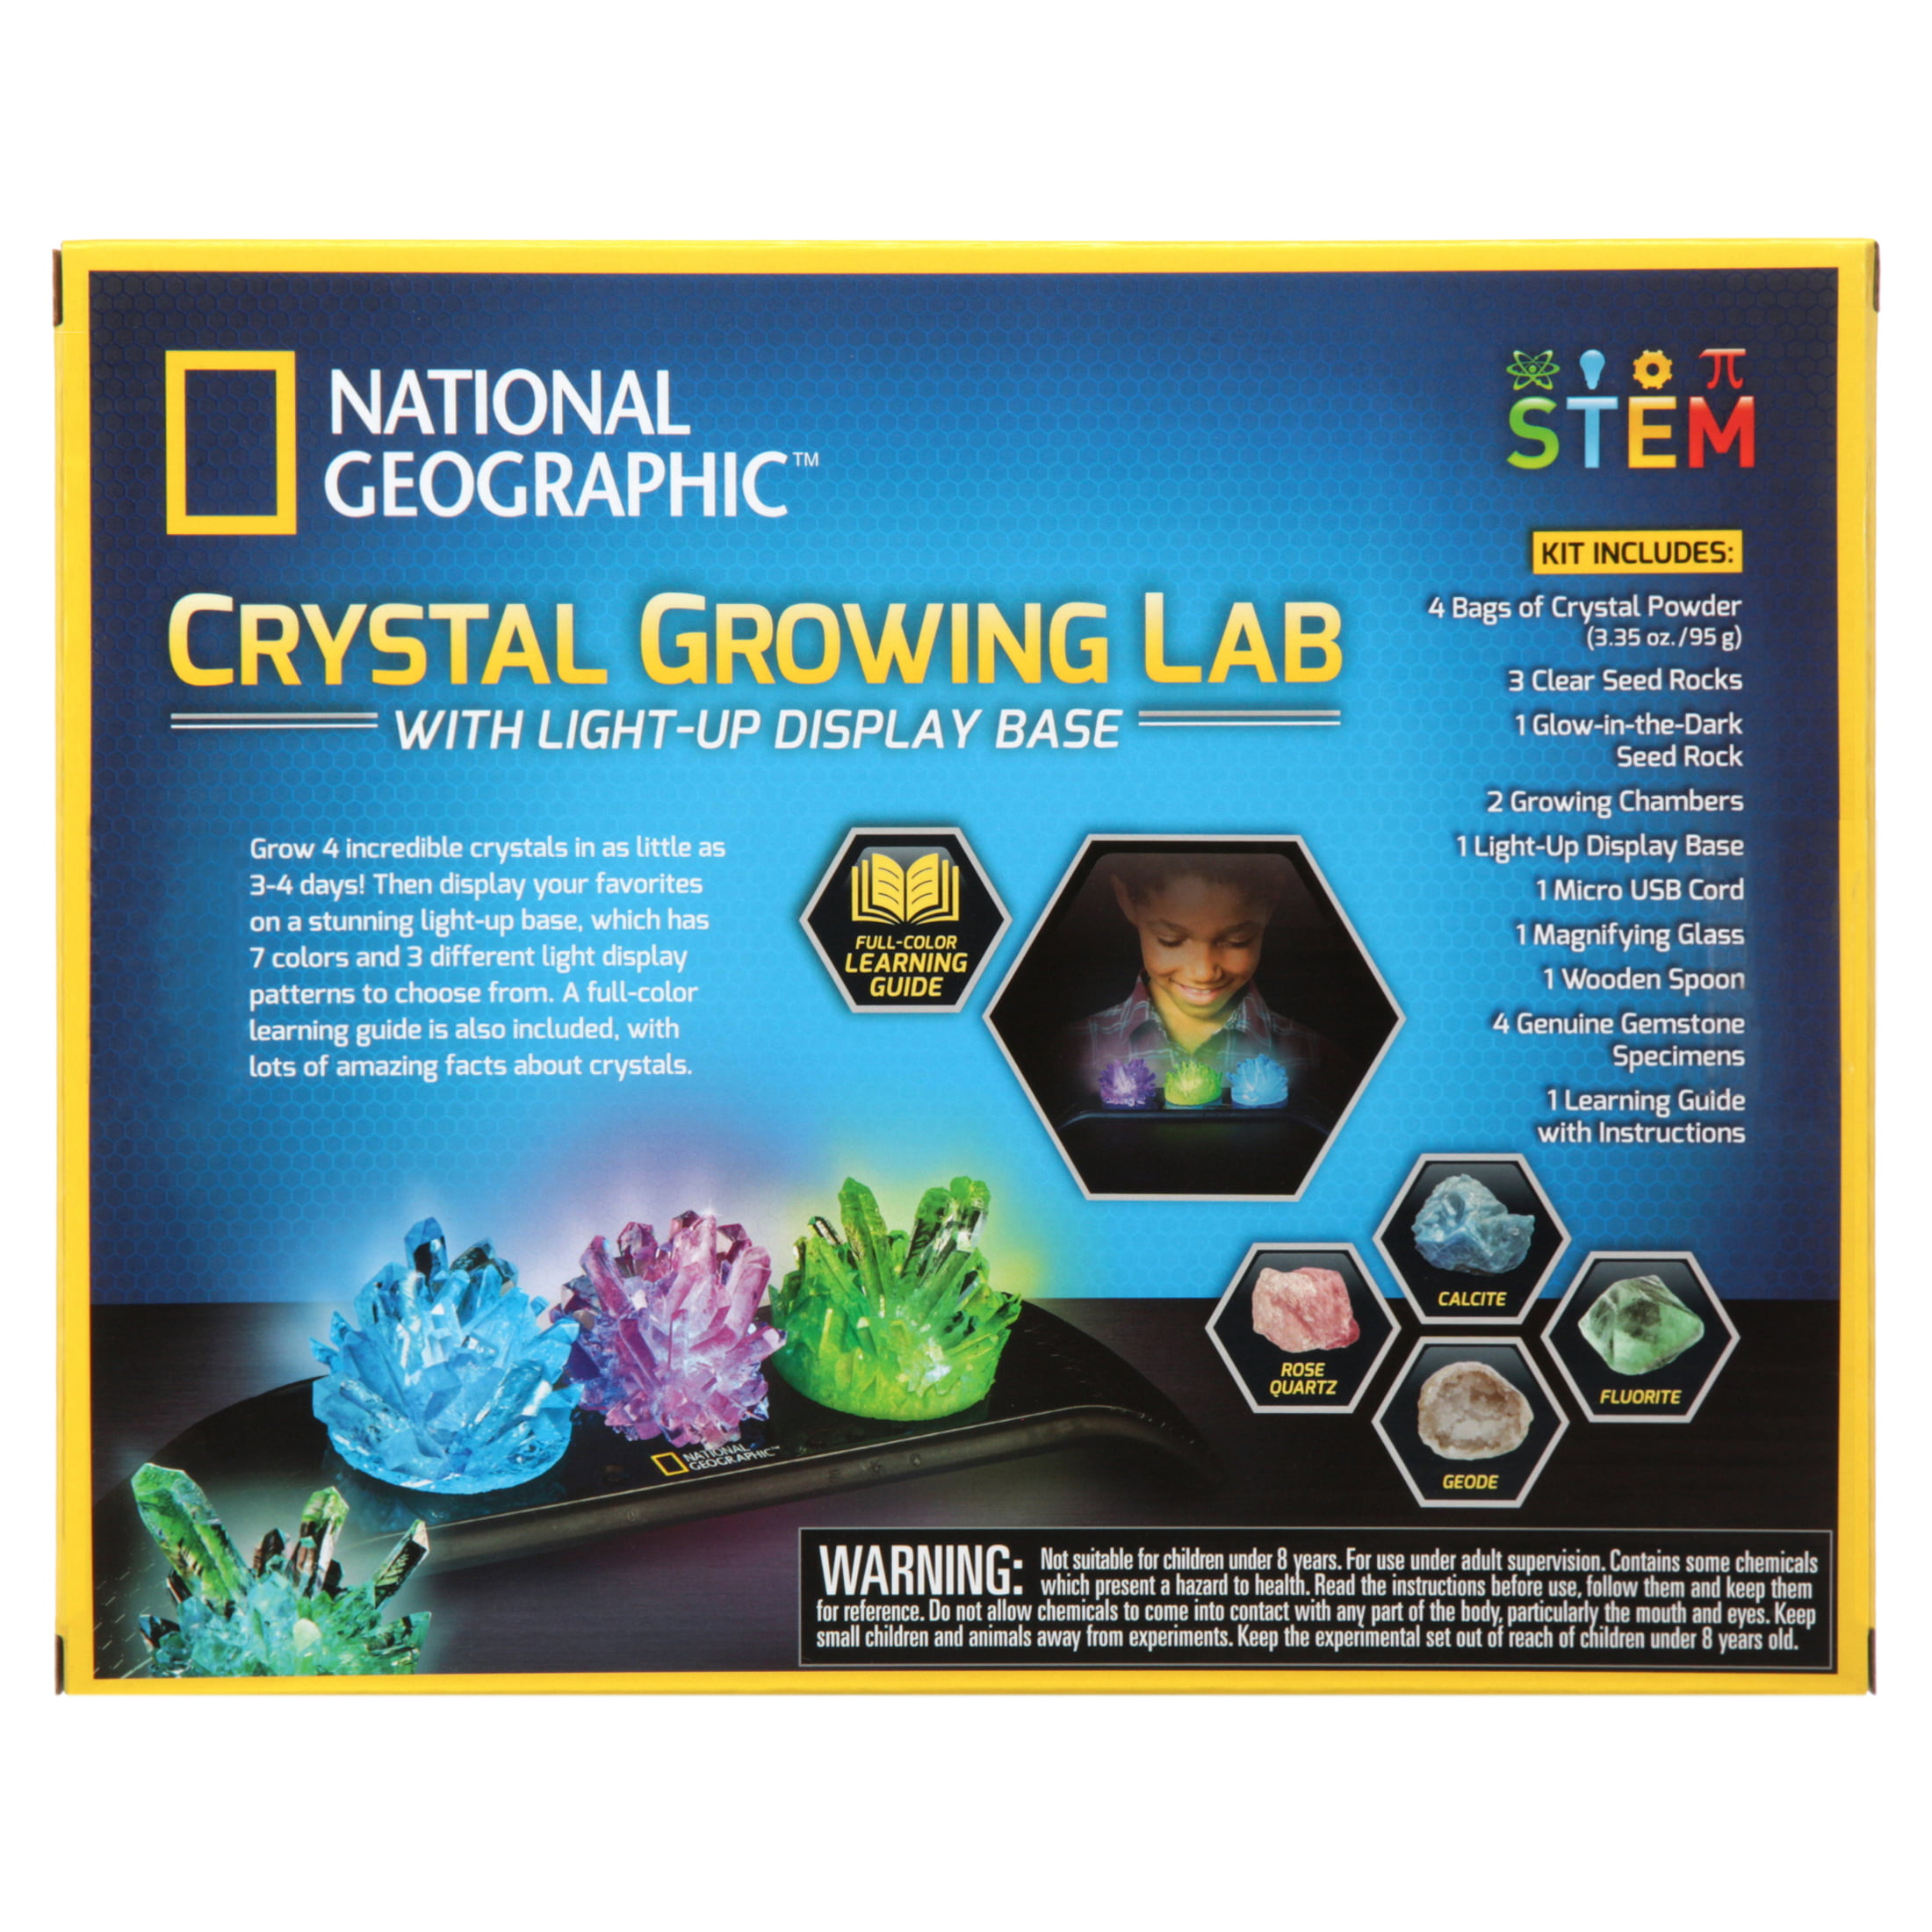 Light Up Crystal Growing Kit - THE BEACH PLUM COMPANY